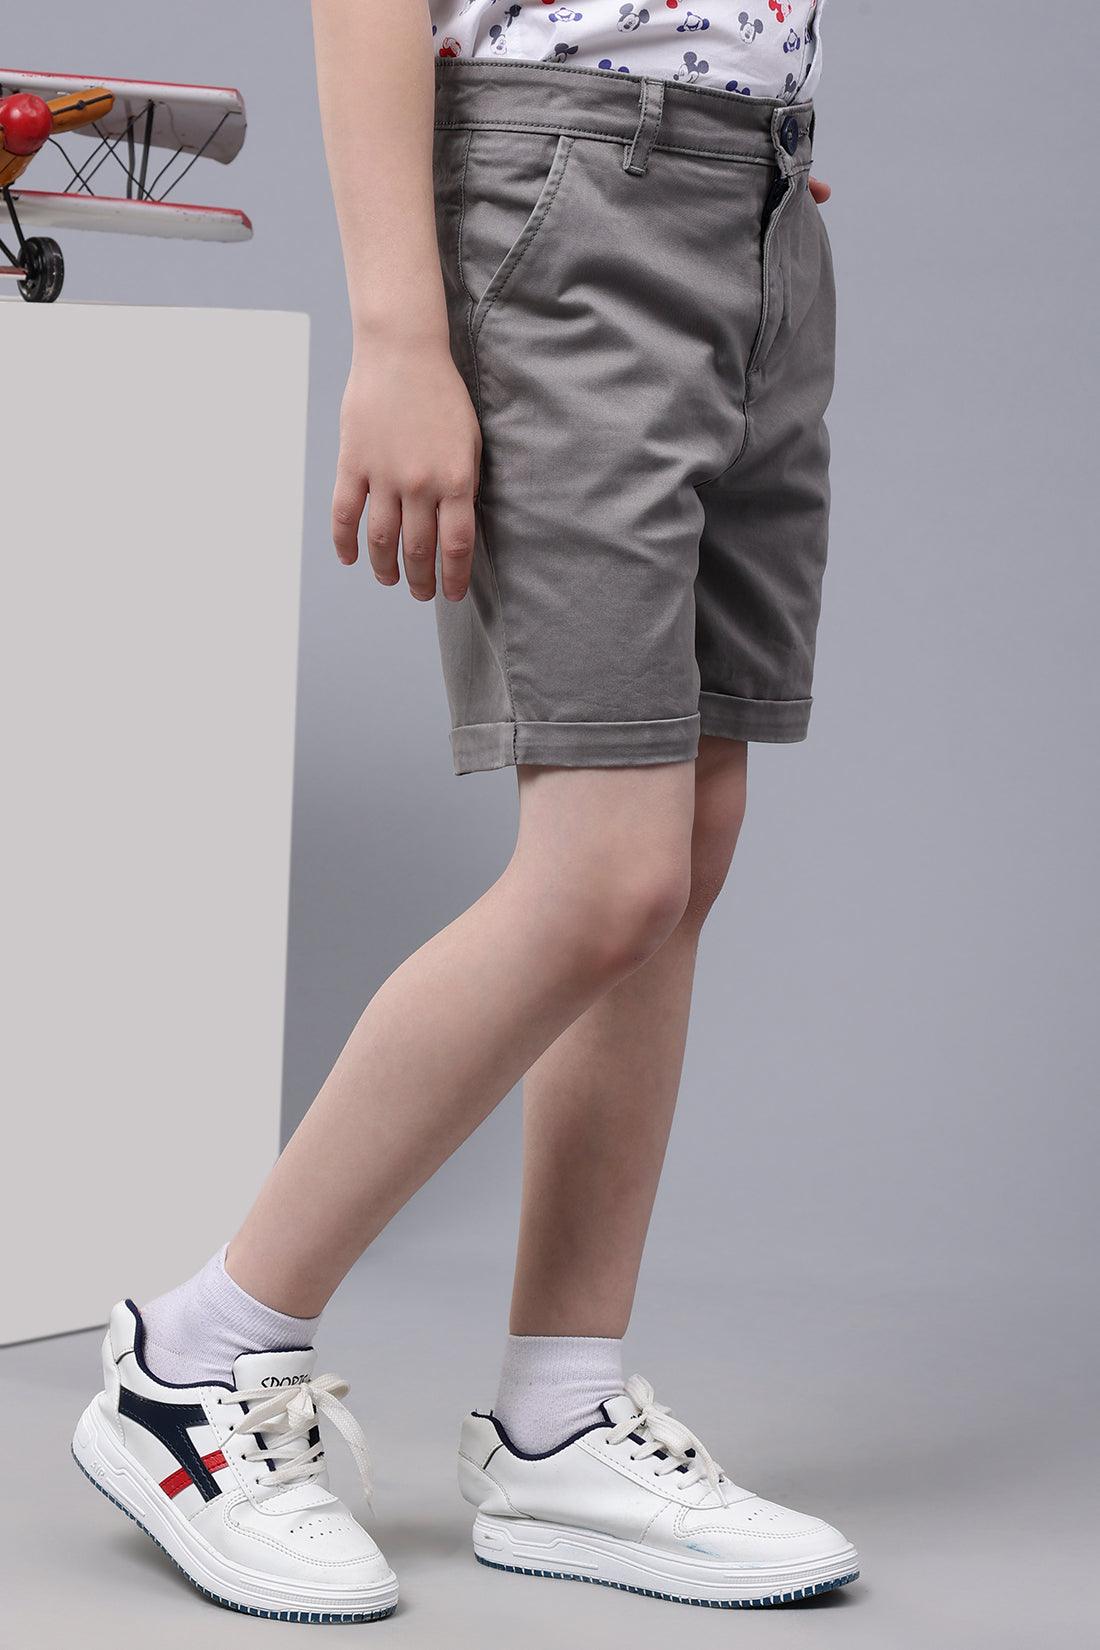 One Friday Kids Boys Grey Cotton Shorts